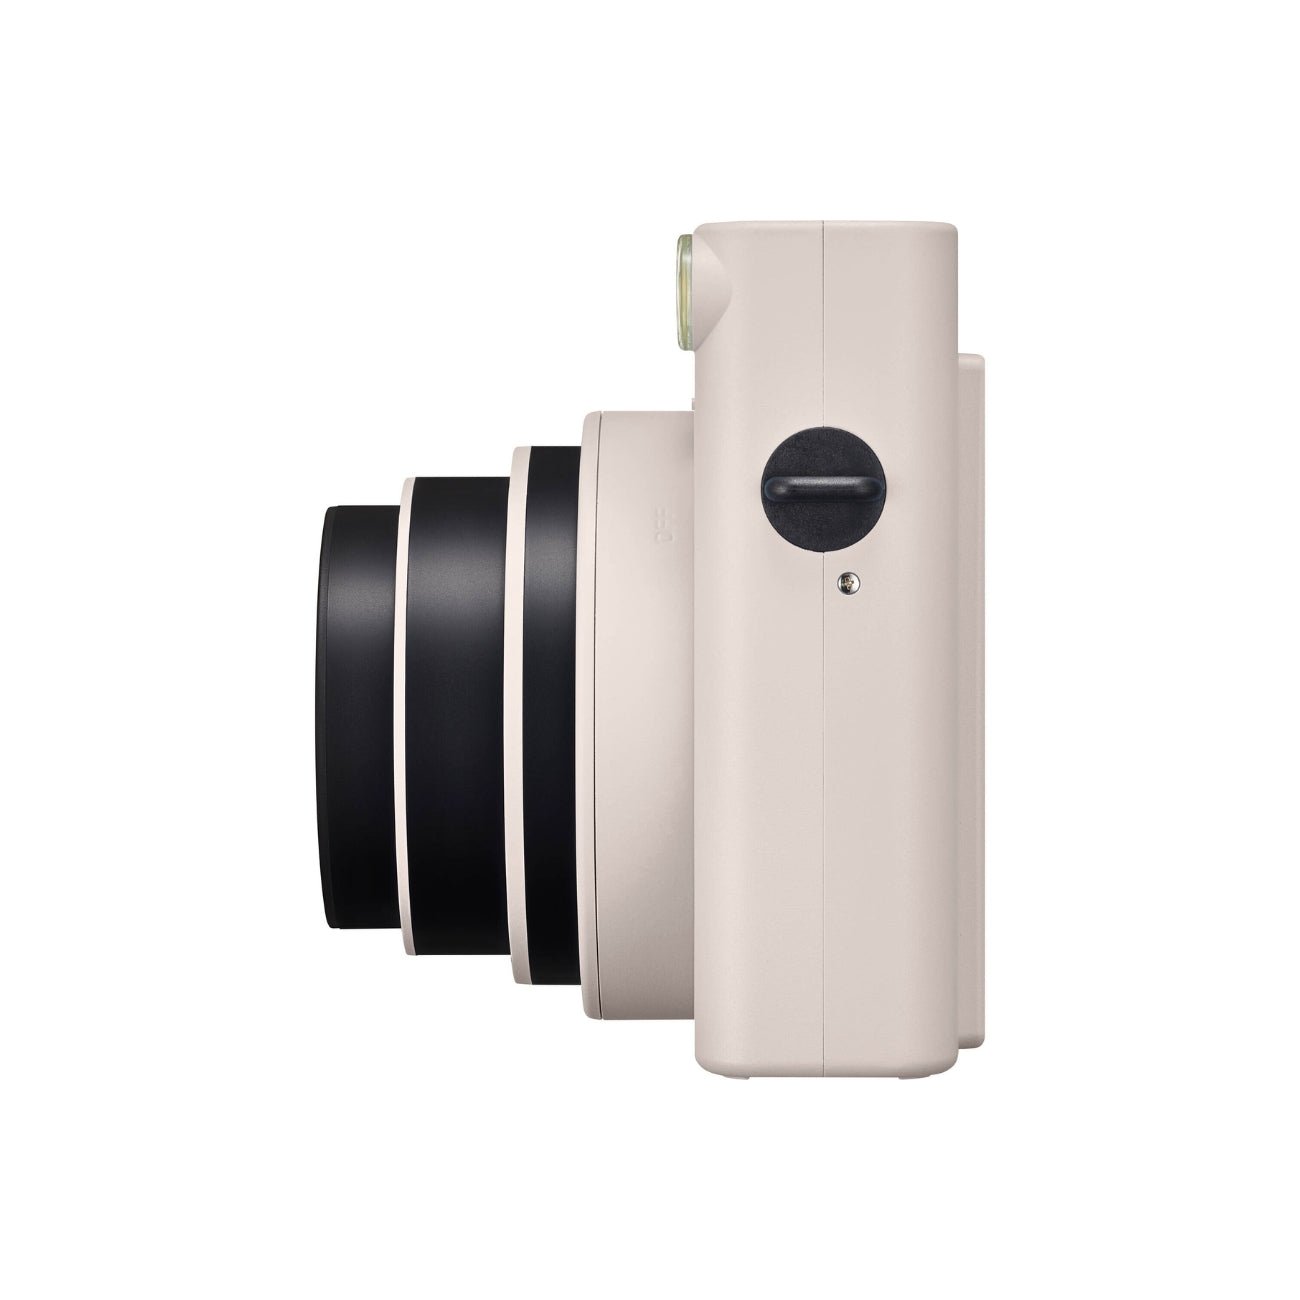 Fujifilm Instax SQUARE SQ1 Instant Film Camera Chalk White Side view